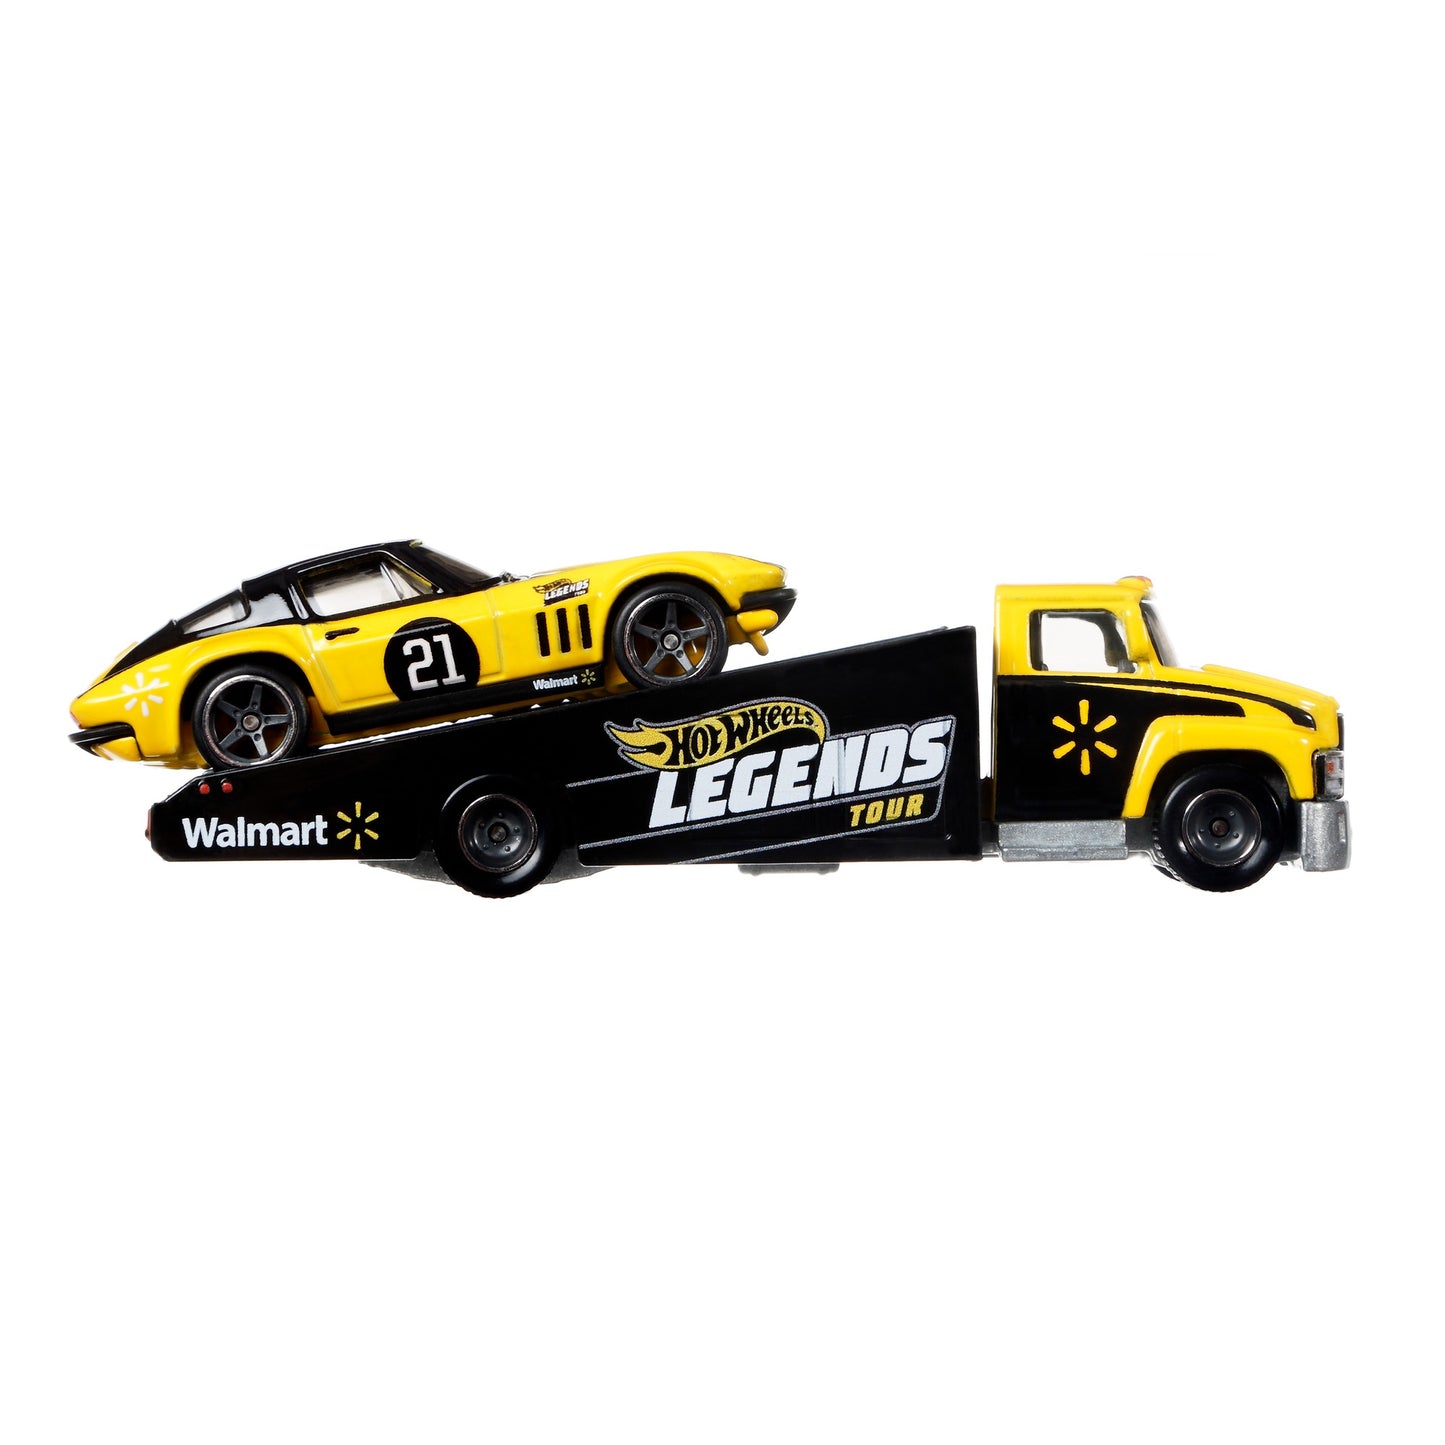 Hot Wheels Legends Tour Walmart Exclusives Team Transport Corvette Stingray Coupe & Carry On 1:64